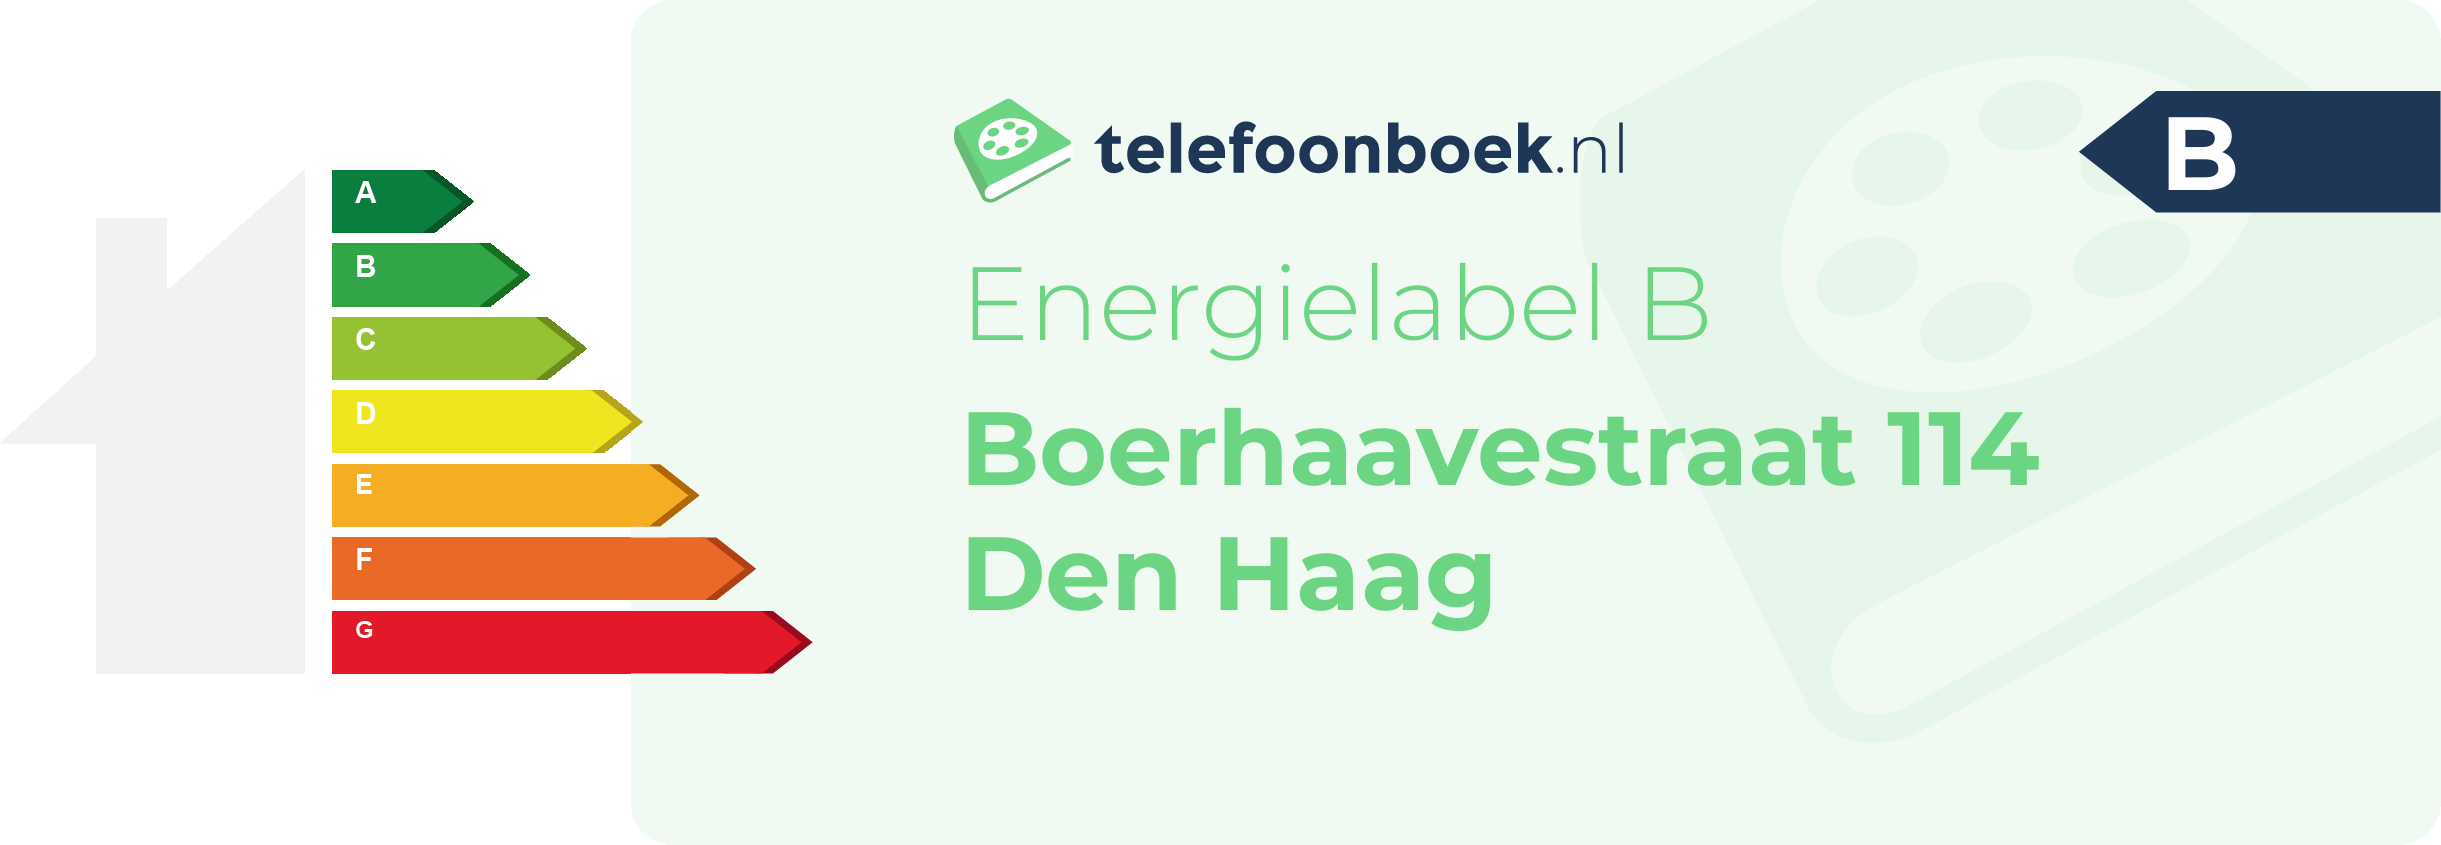 Energielabel Boerhaavestraat 114 Den Haag